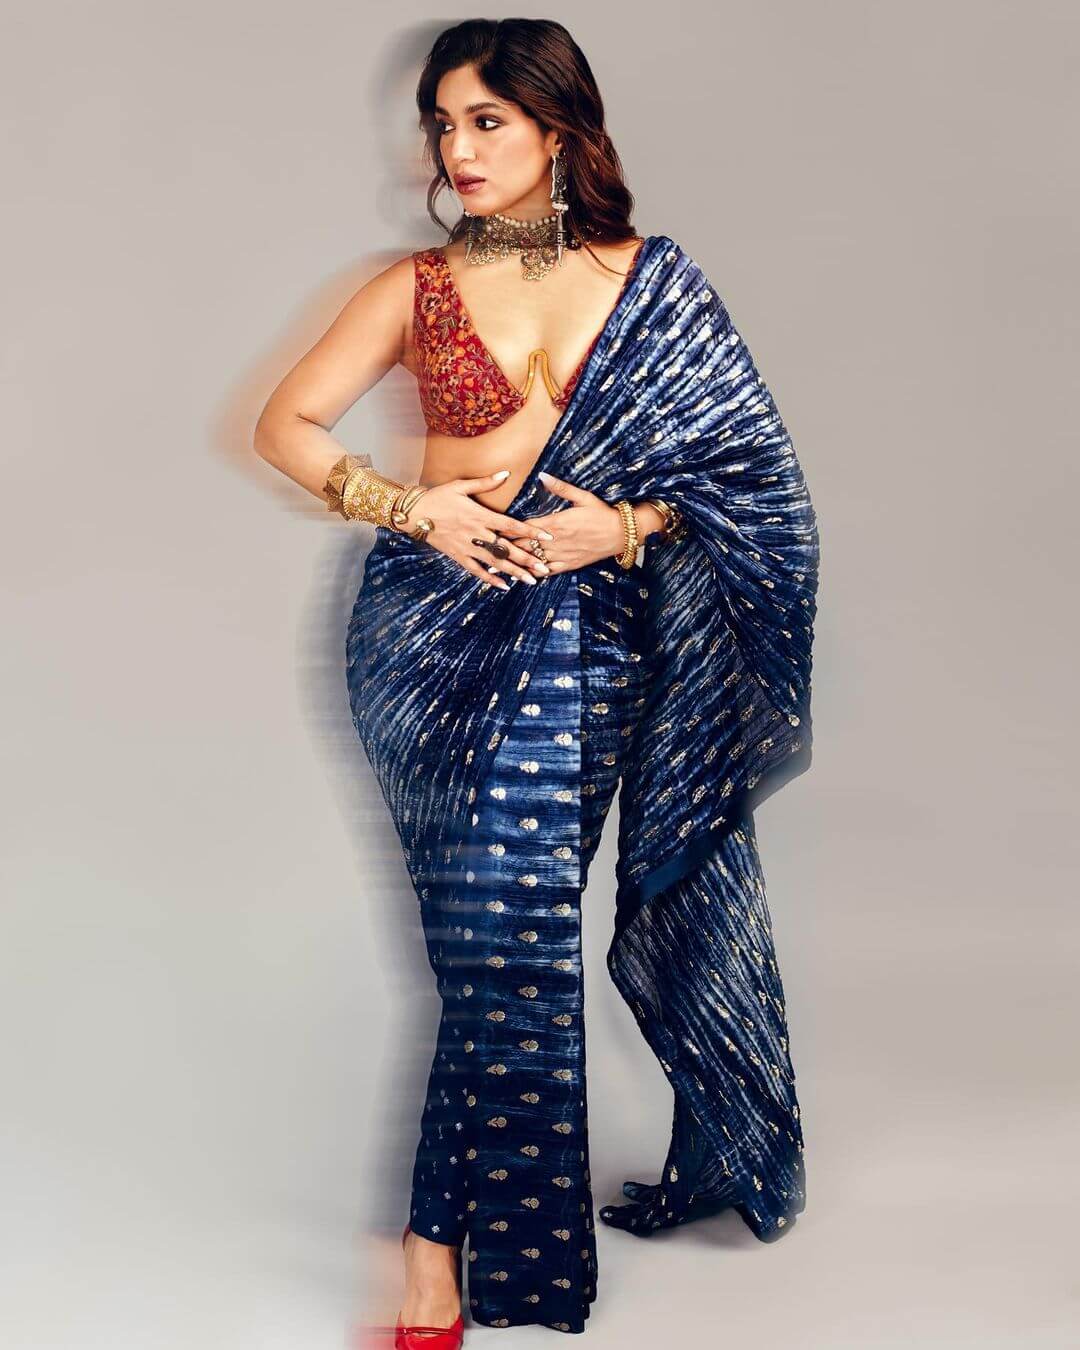 Bhumi Pednekar's Sari Is Art In Motion